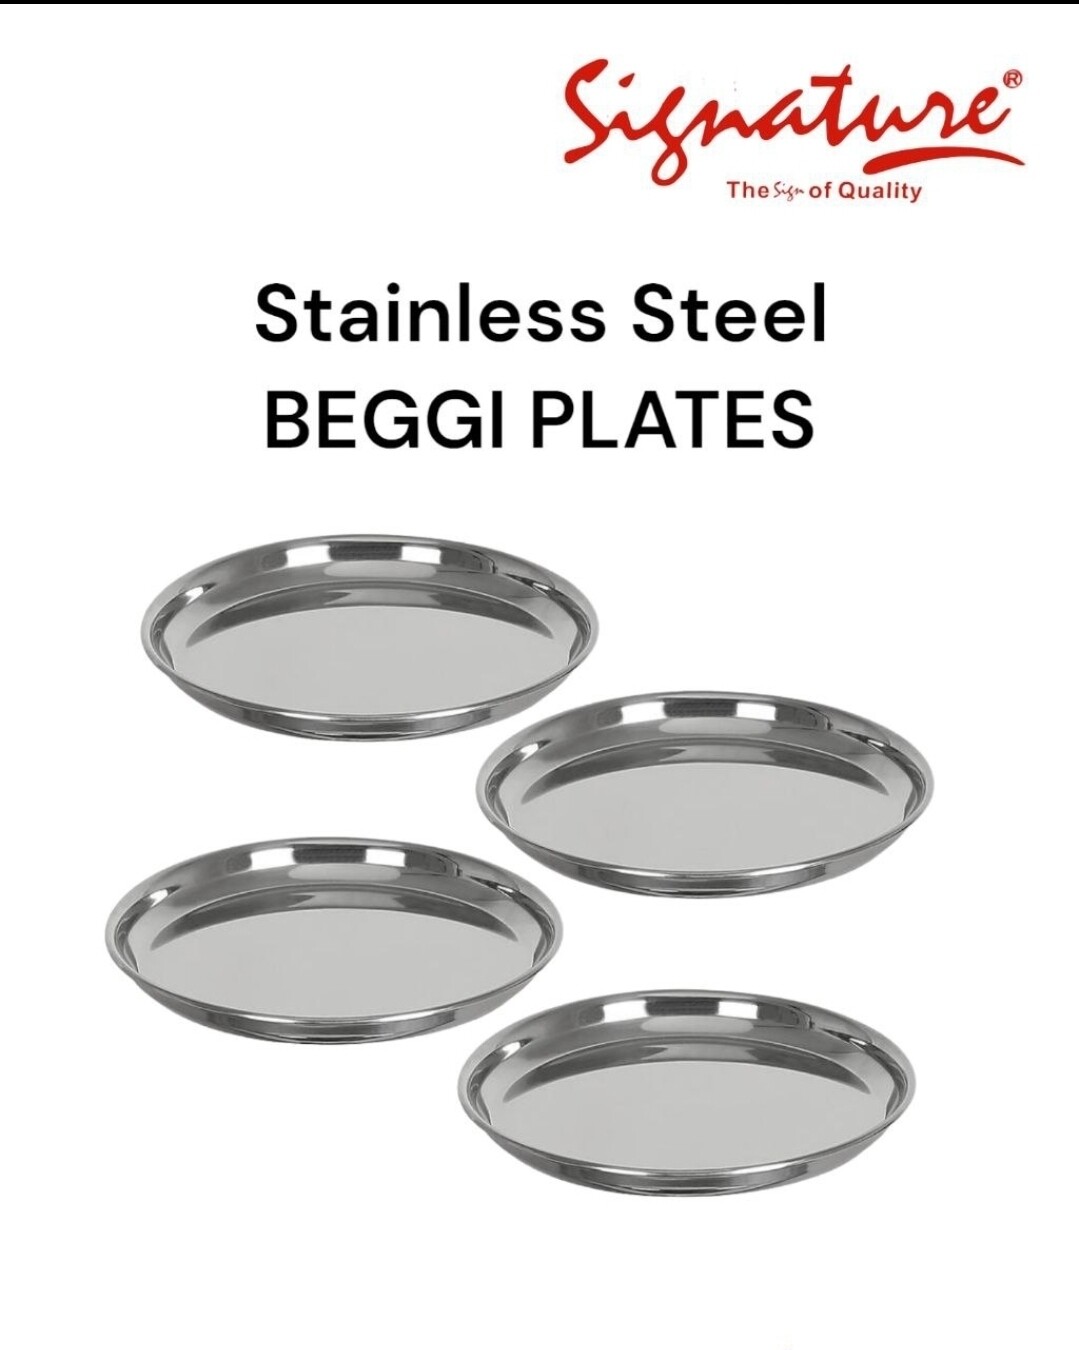 Signature 21cm stainless steel beggi plates